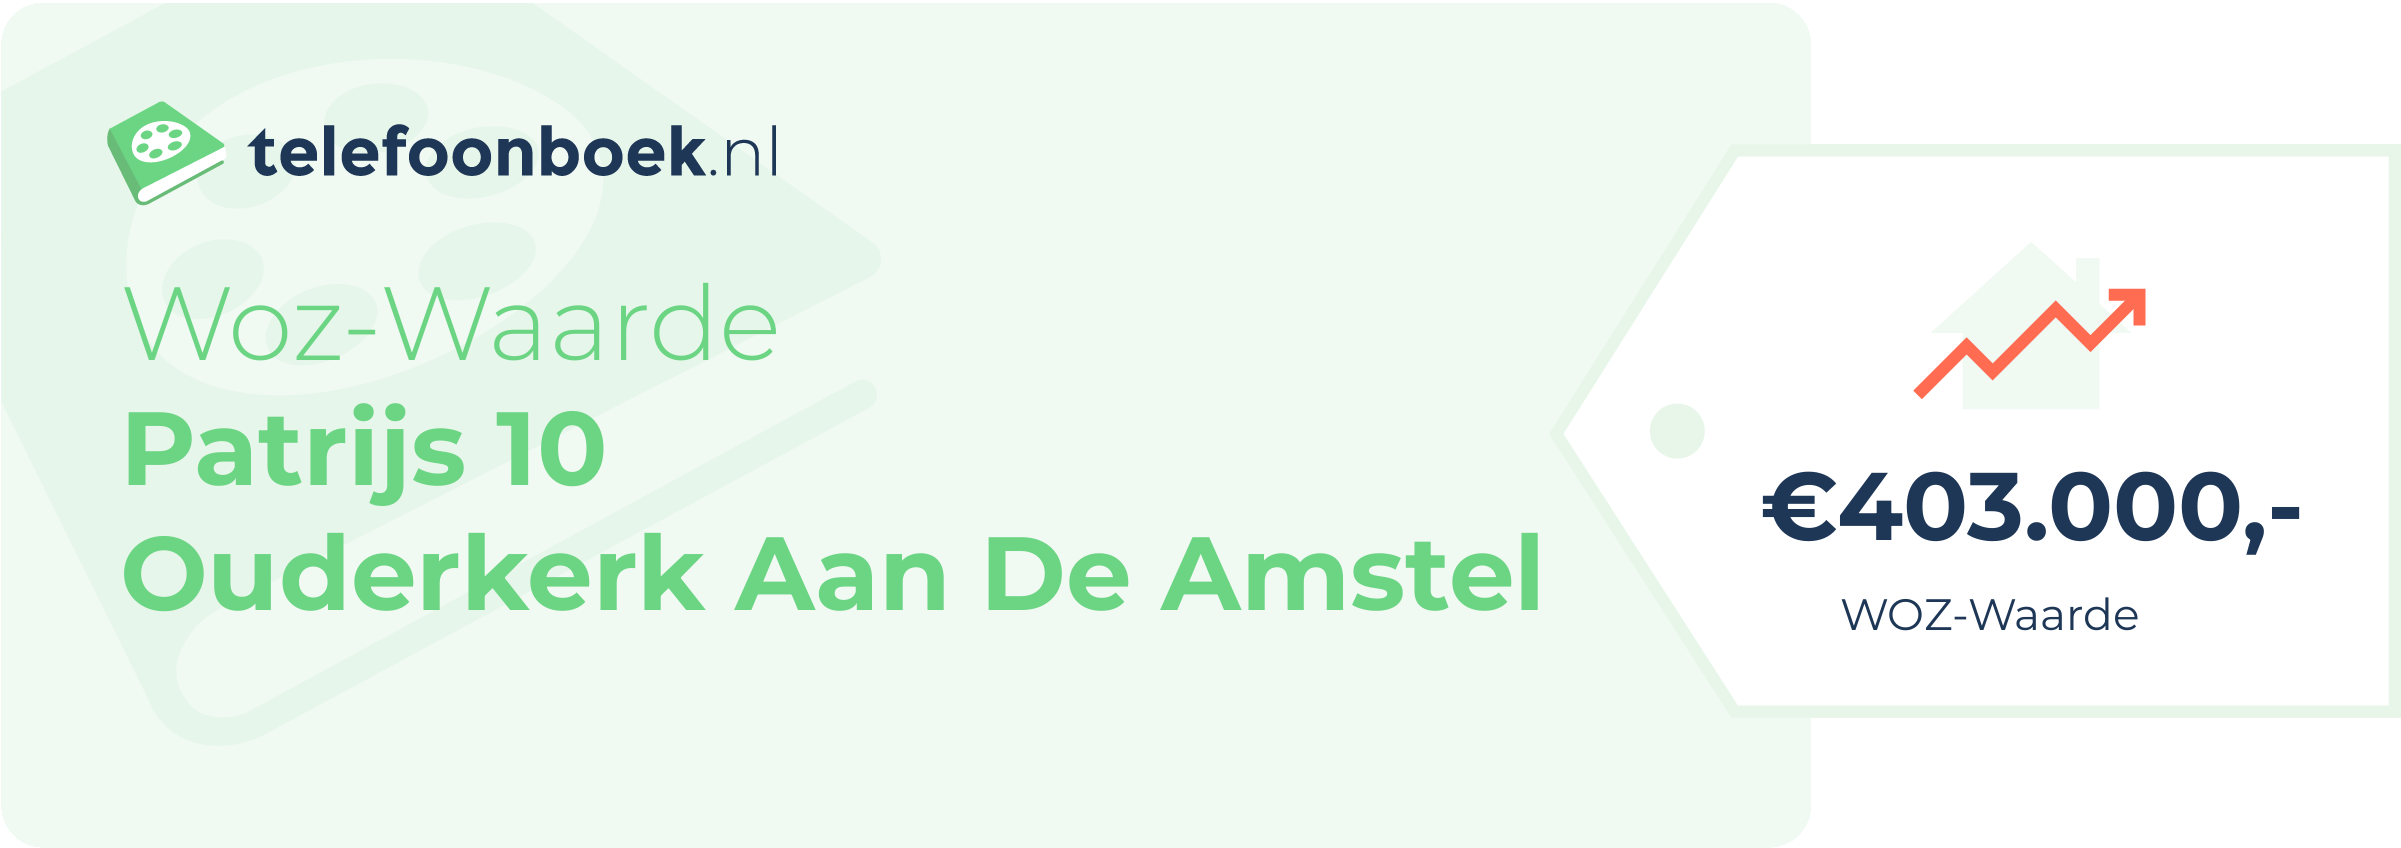 WOZ-waarde Patrijs 10 Ouderkerk Aan De Amstel